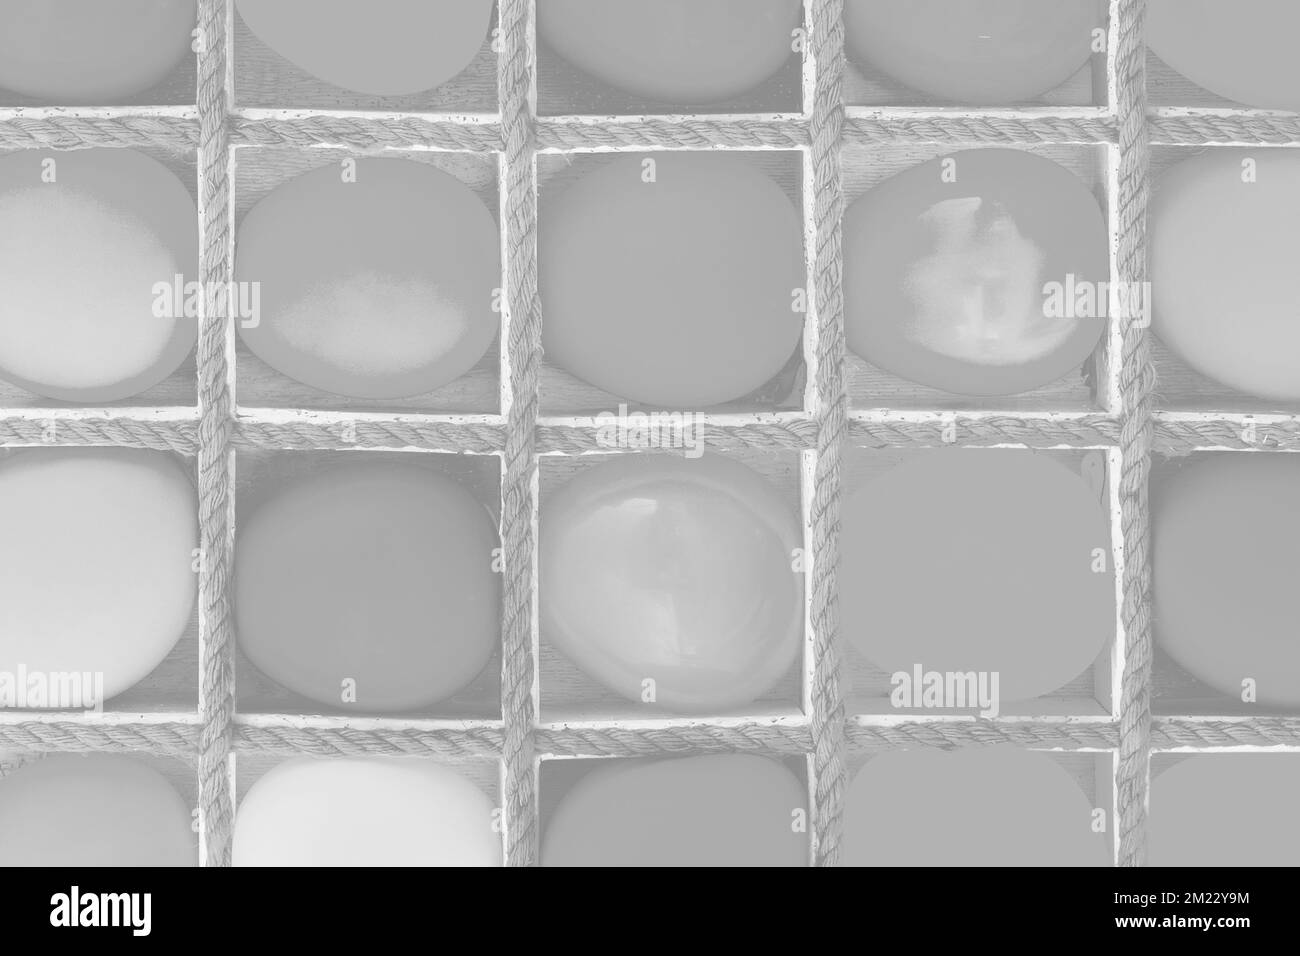 Helium Black and White Stock Photos & Images - Alamy